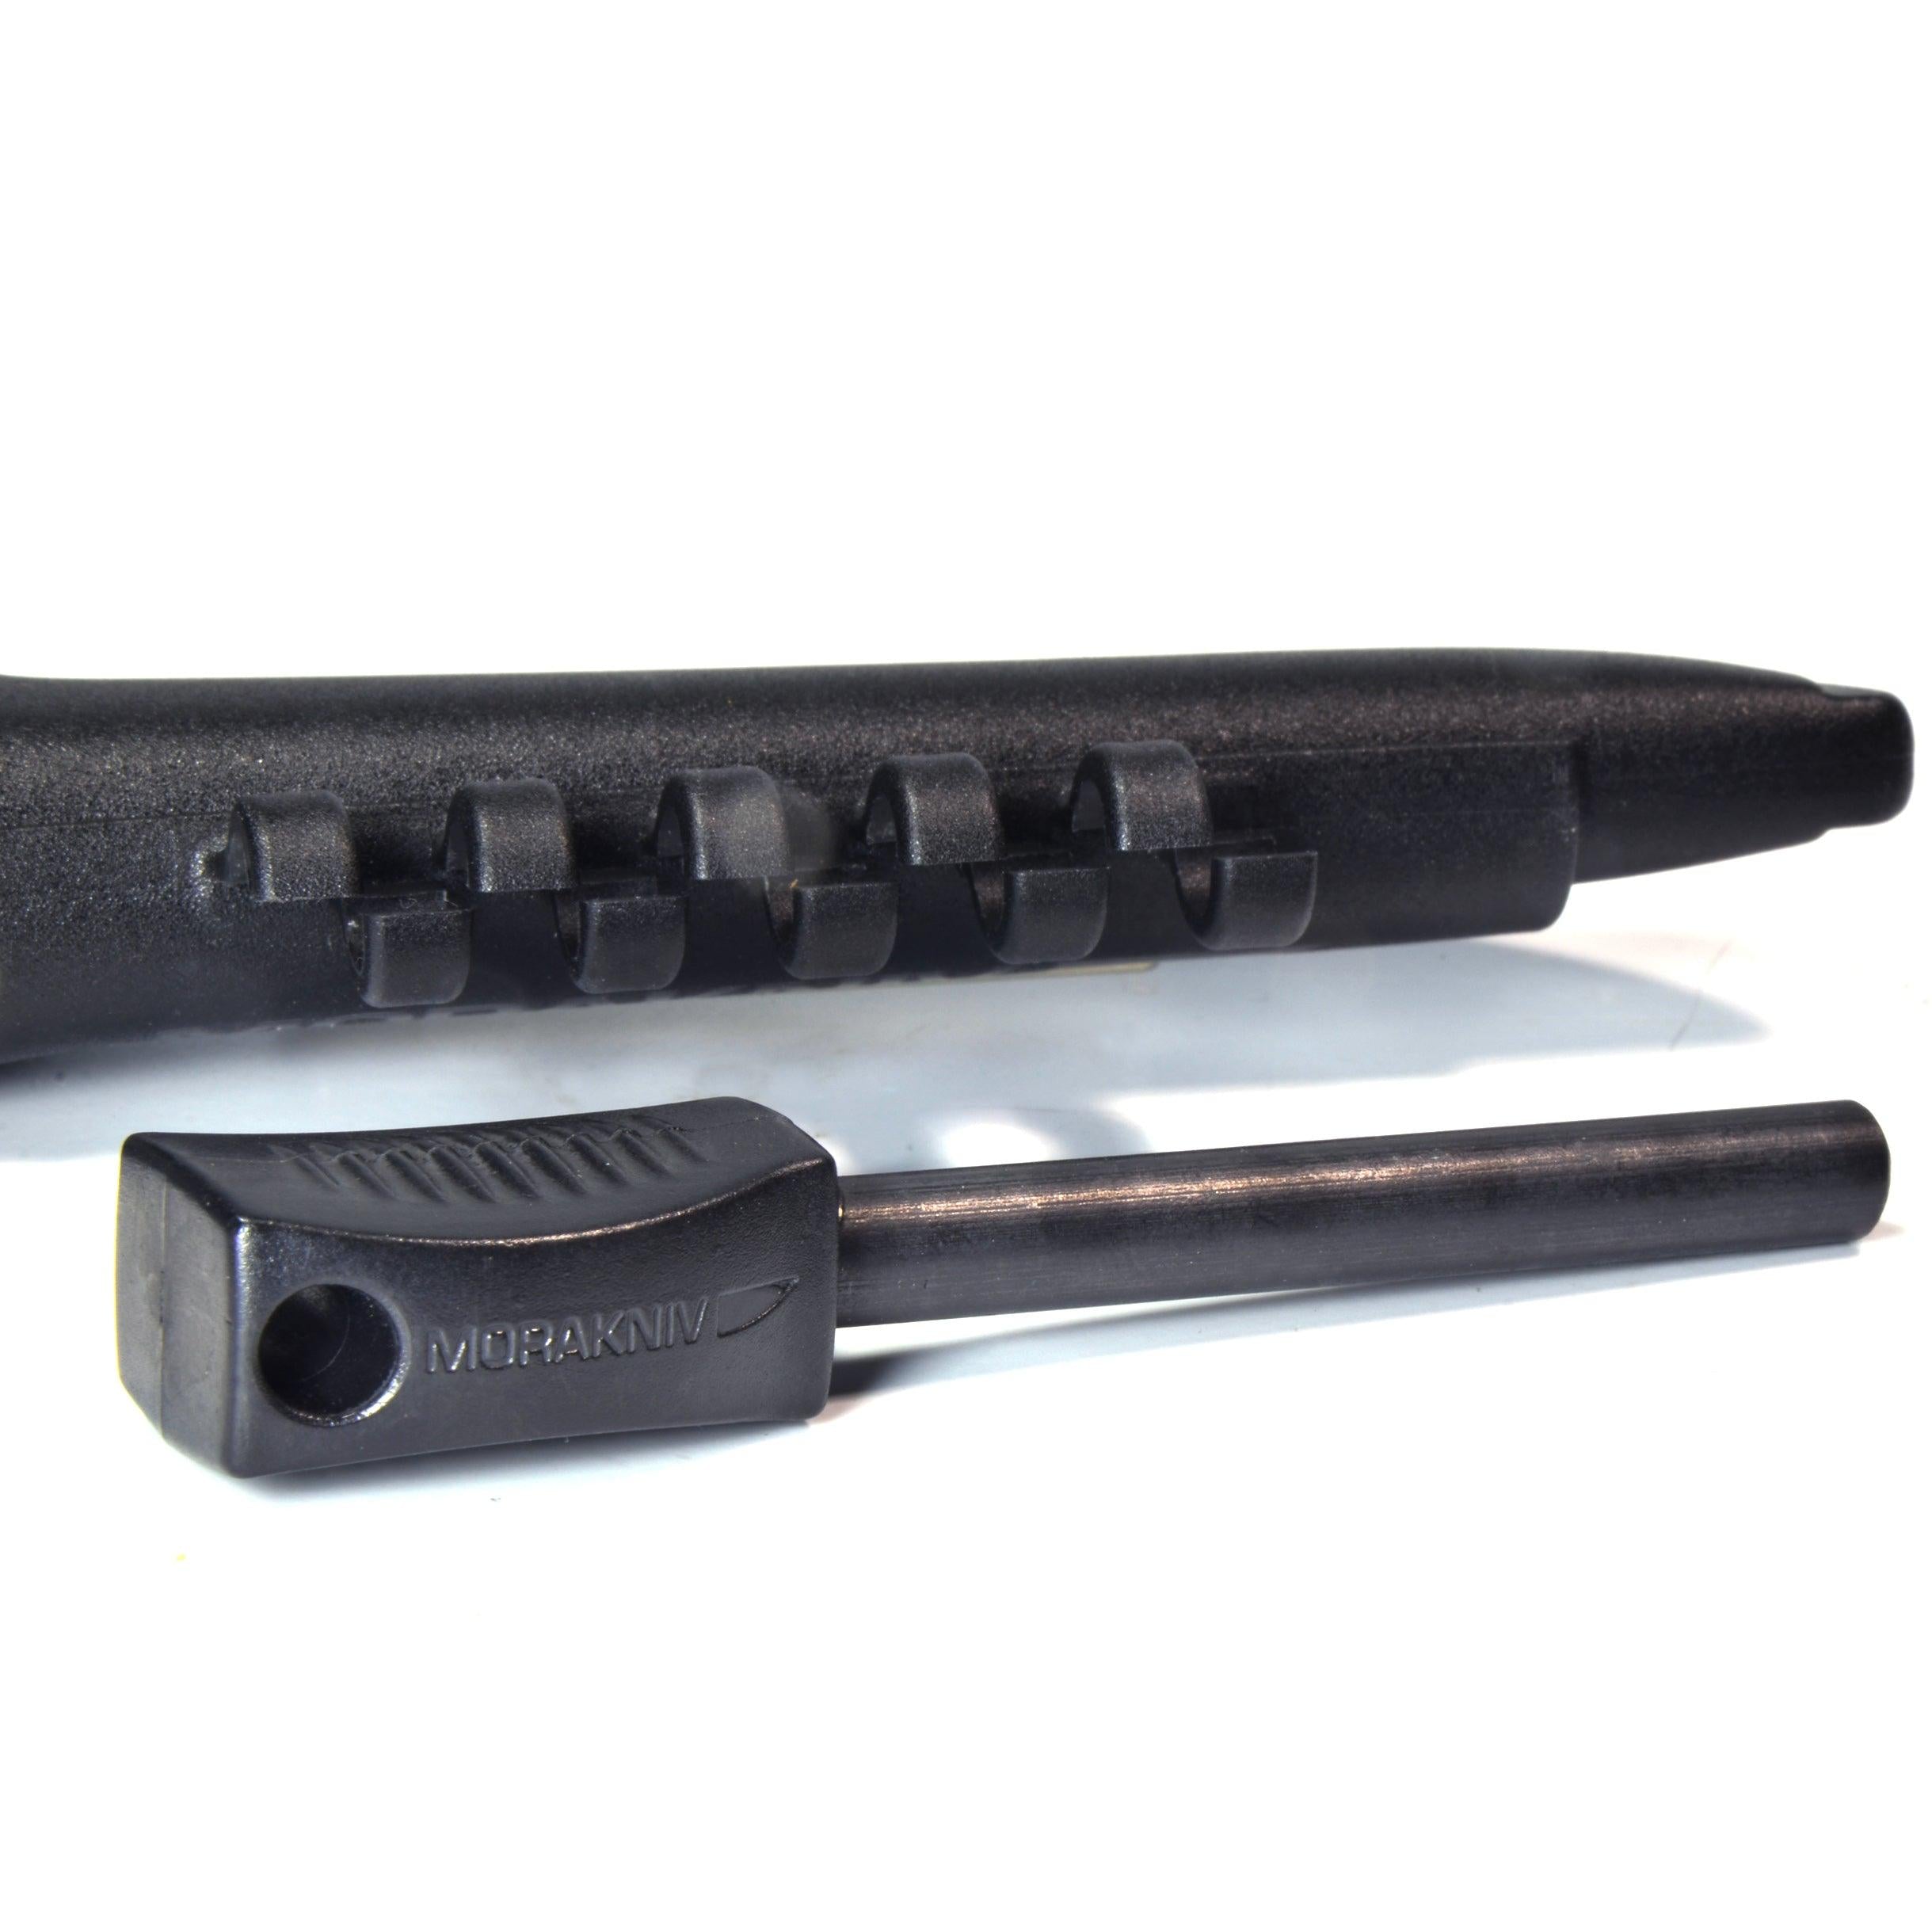 Morakniv® Bushcraft Survival Carbon Knife with Plastic Sheath - Trusted Gear Company LLC